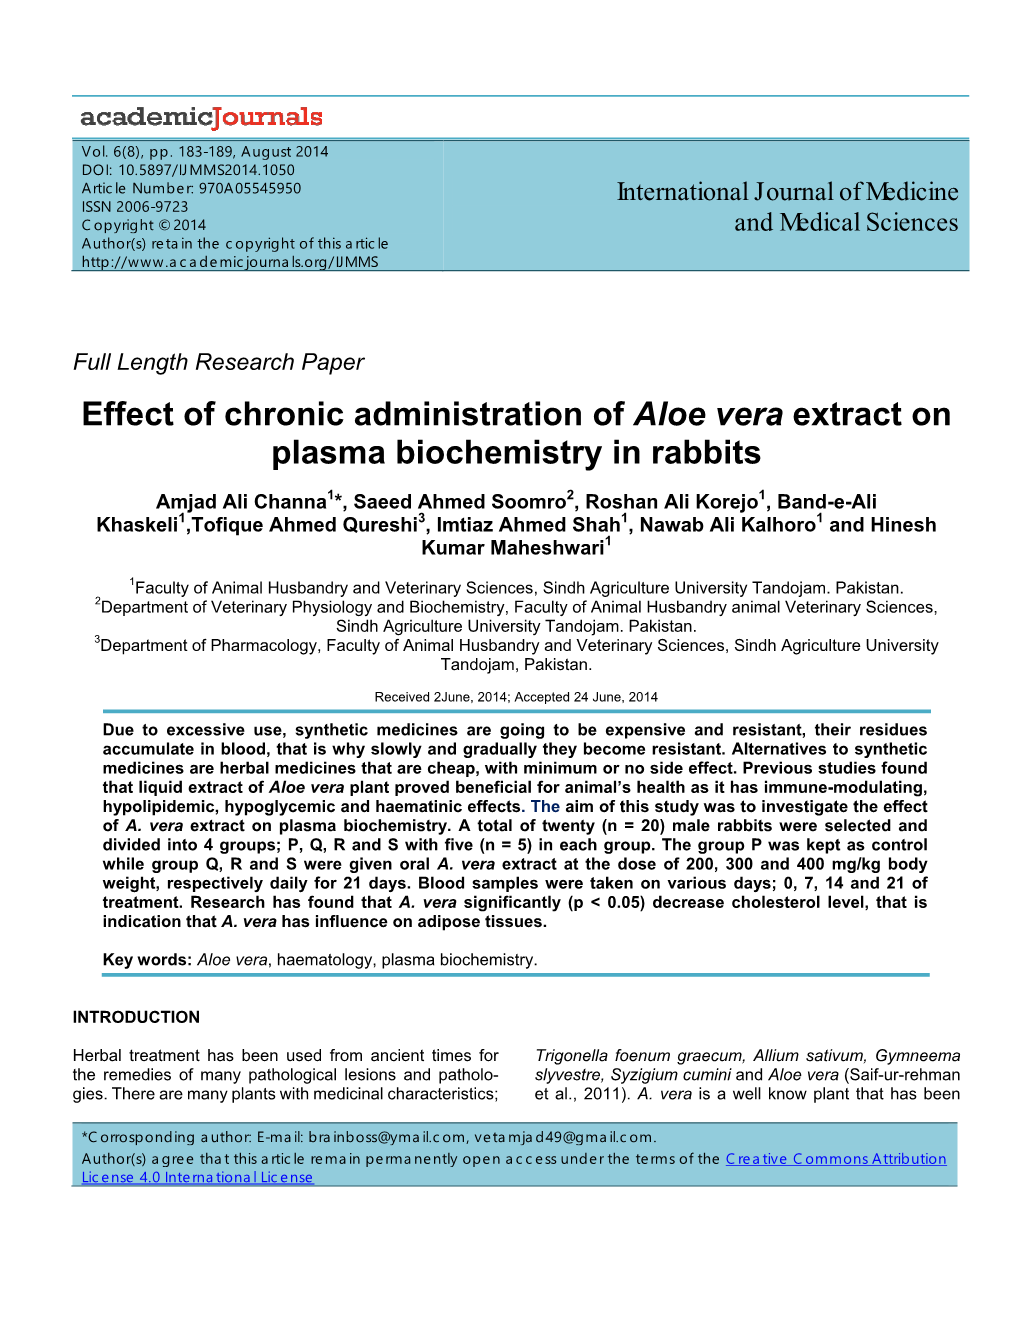 Effect of Chronic Administration of Aloe Vera Extract on Plasma Biochemistry in Rabbits